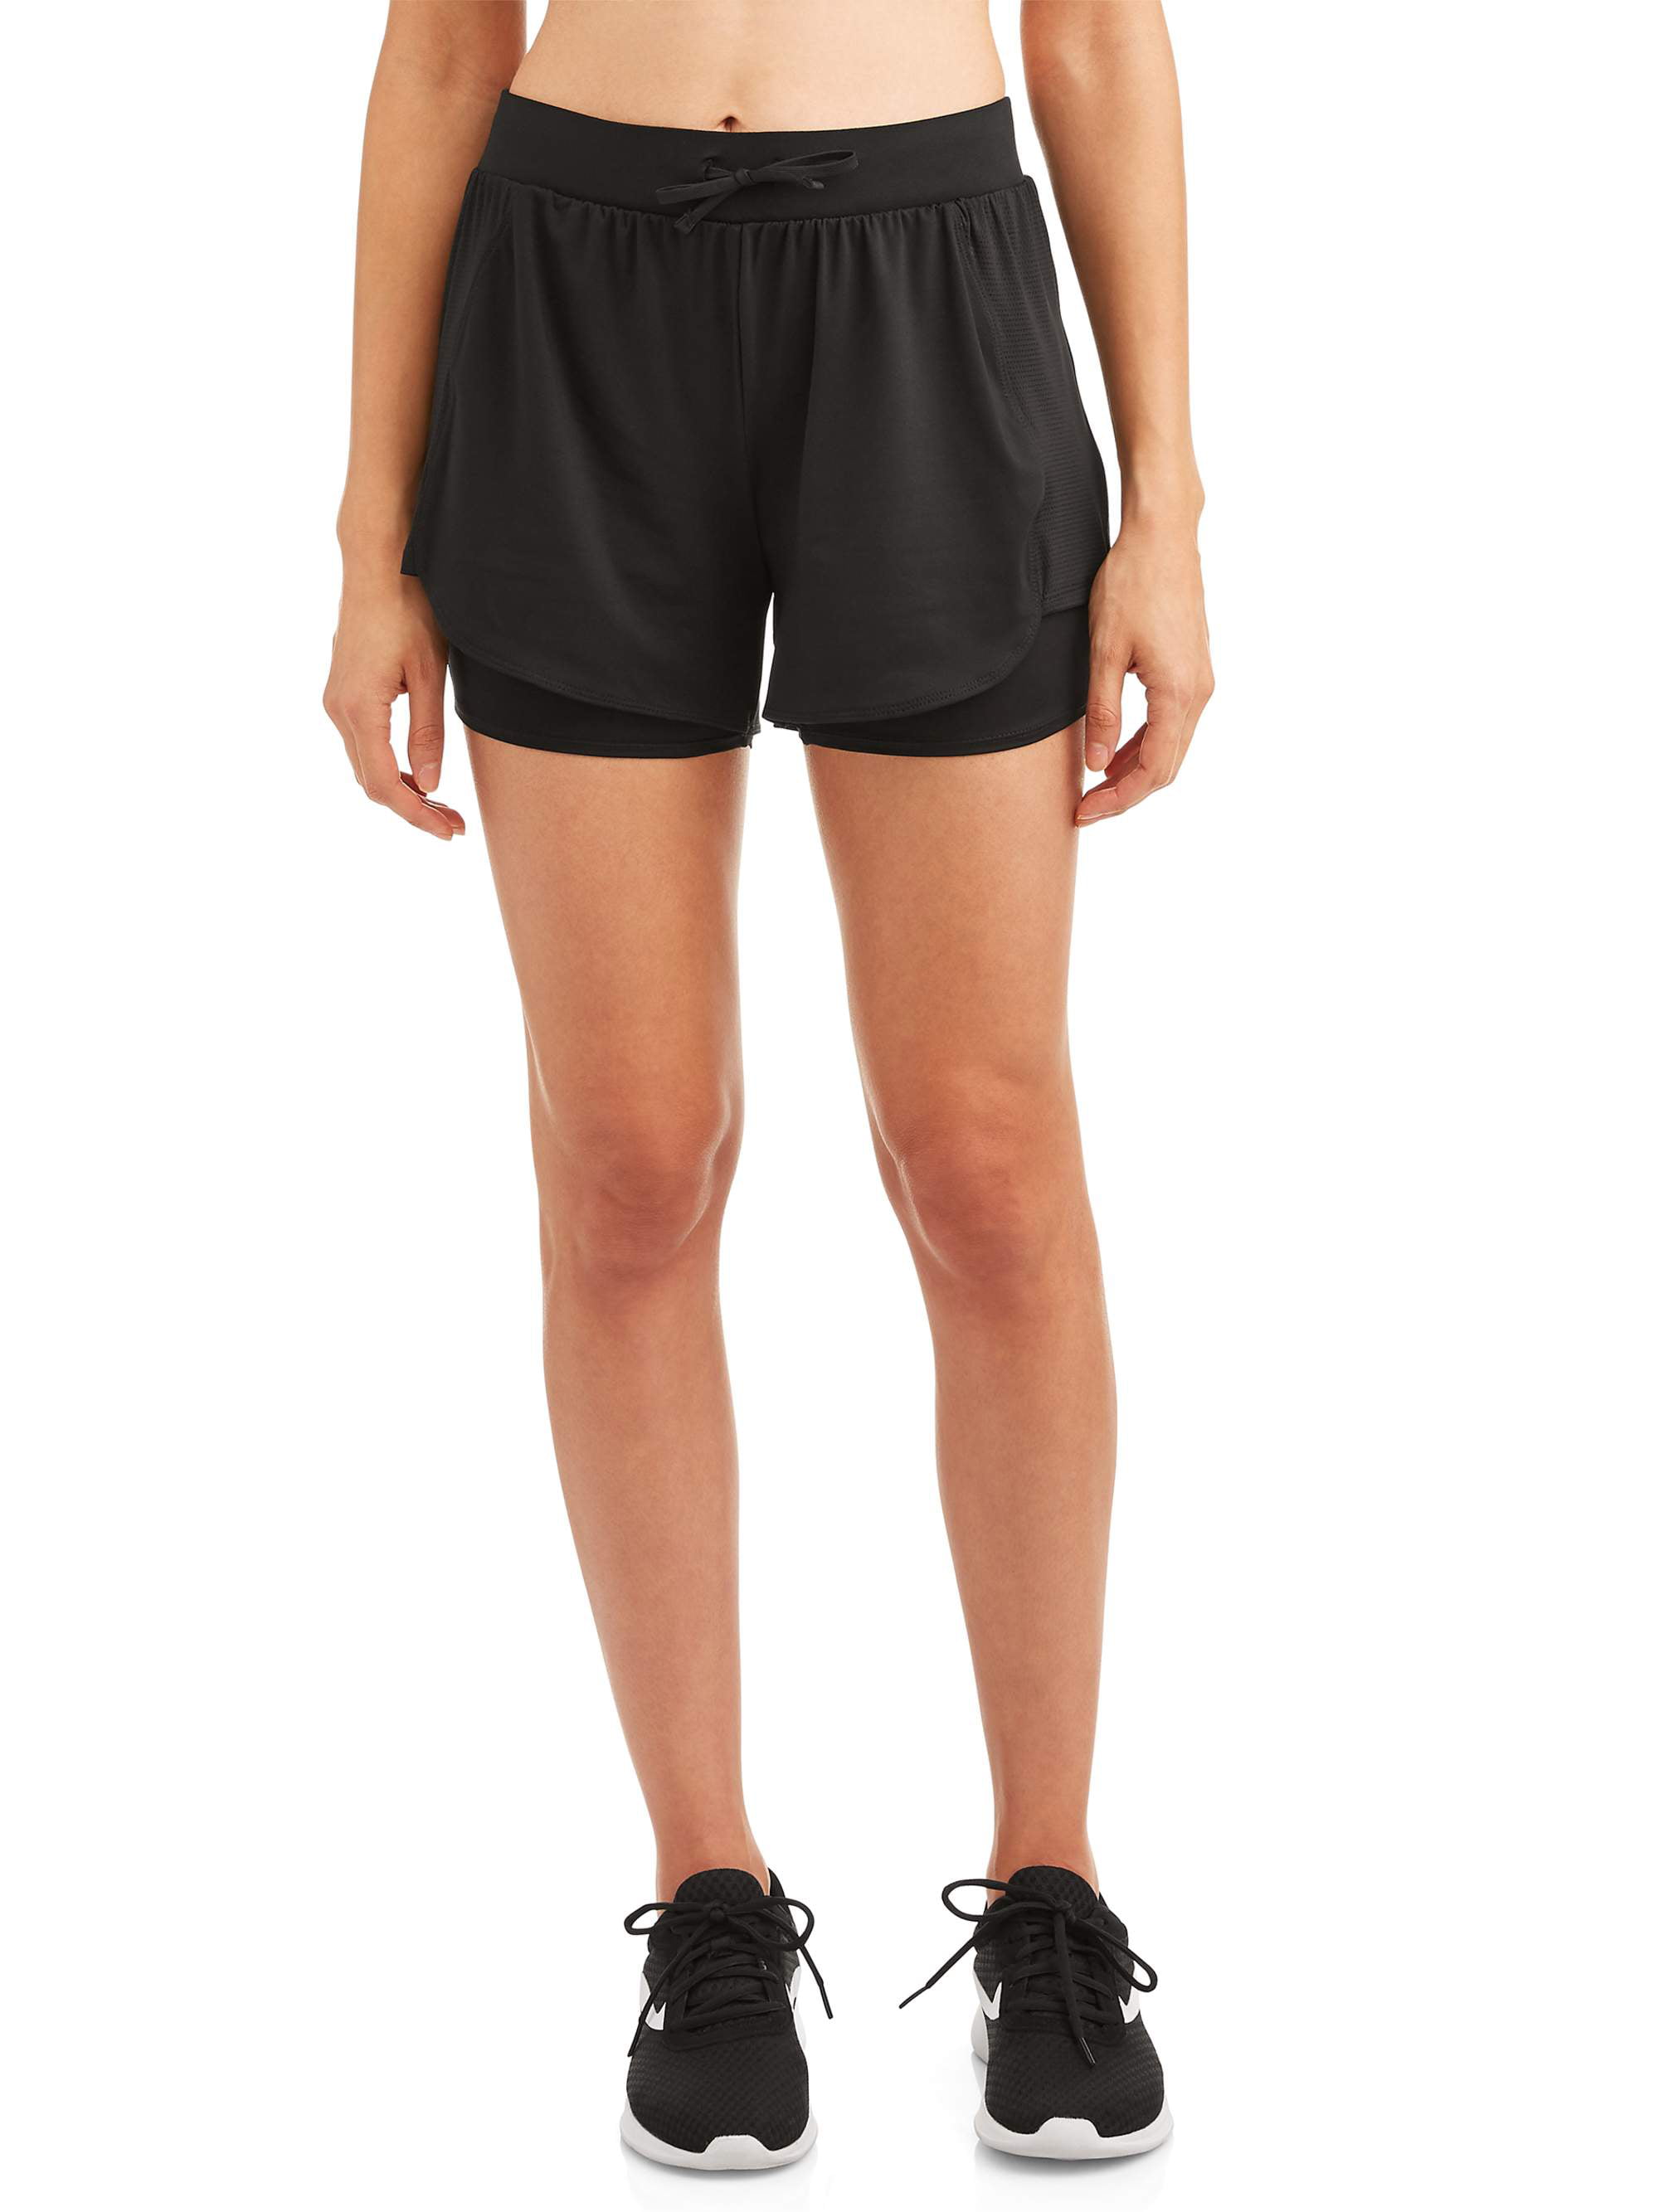 shorts with bike shorts underneath